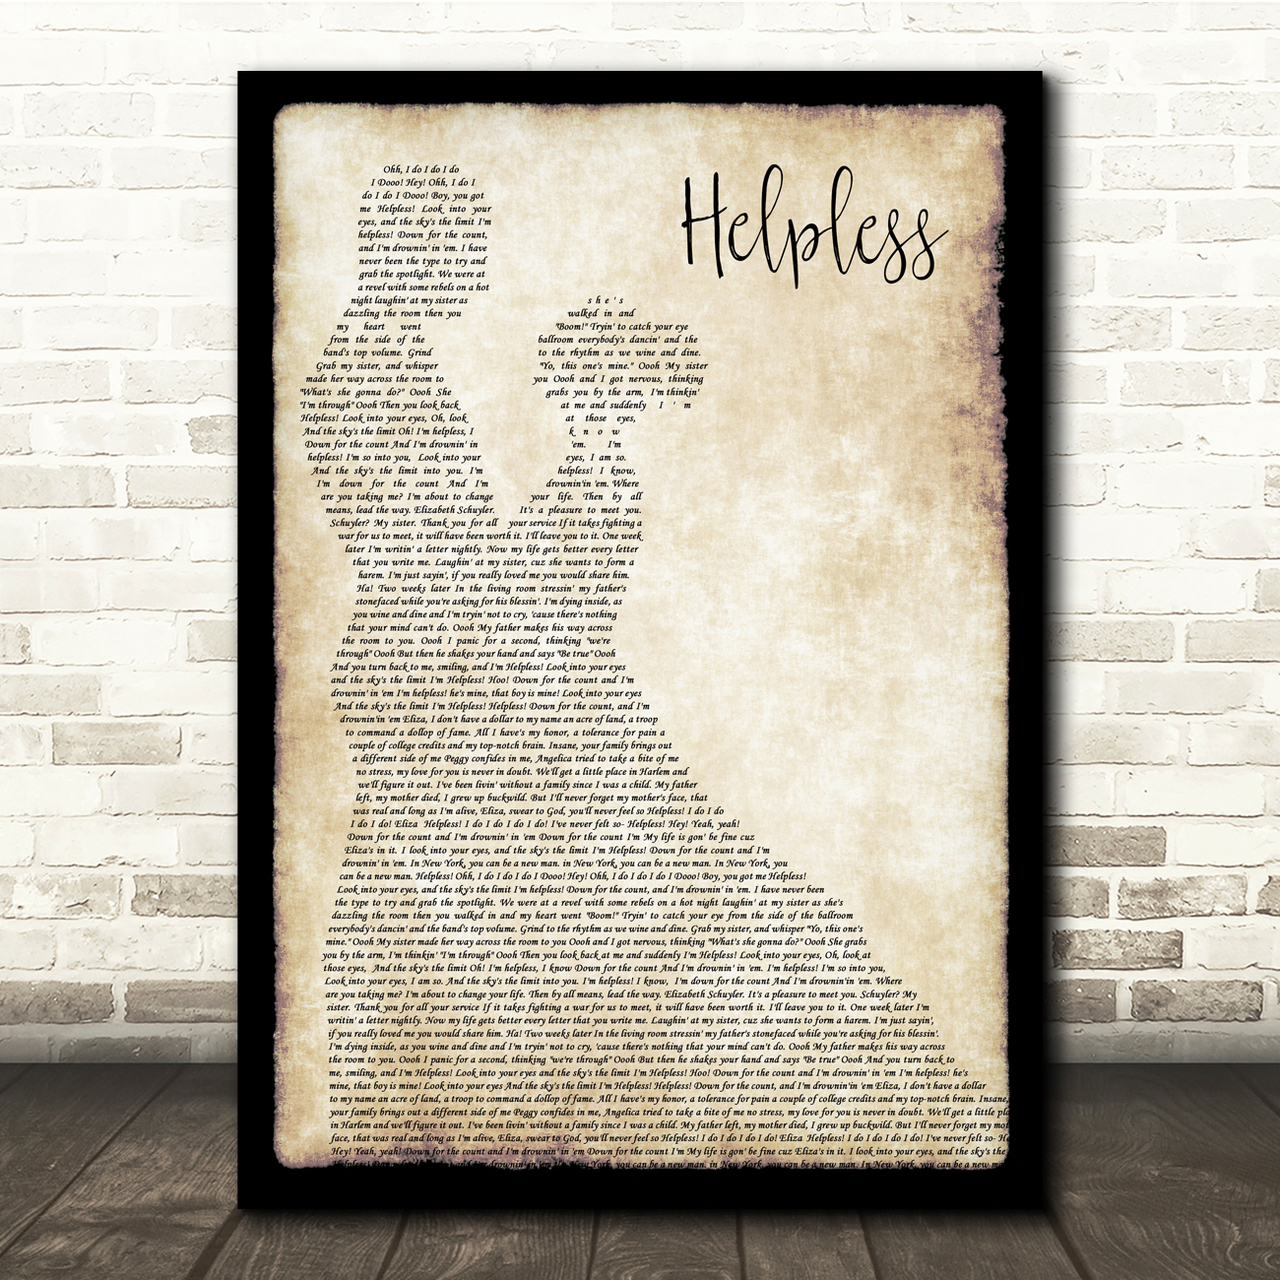 Phillipa Soo, Original Broadway Cast of Hamilton Helpless Man Lady Dancing Song Lyric Quote Music Poster Print